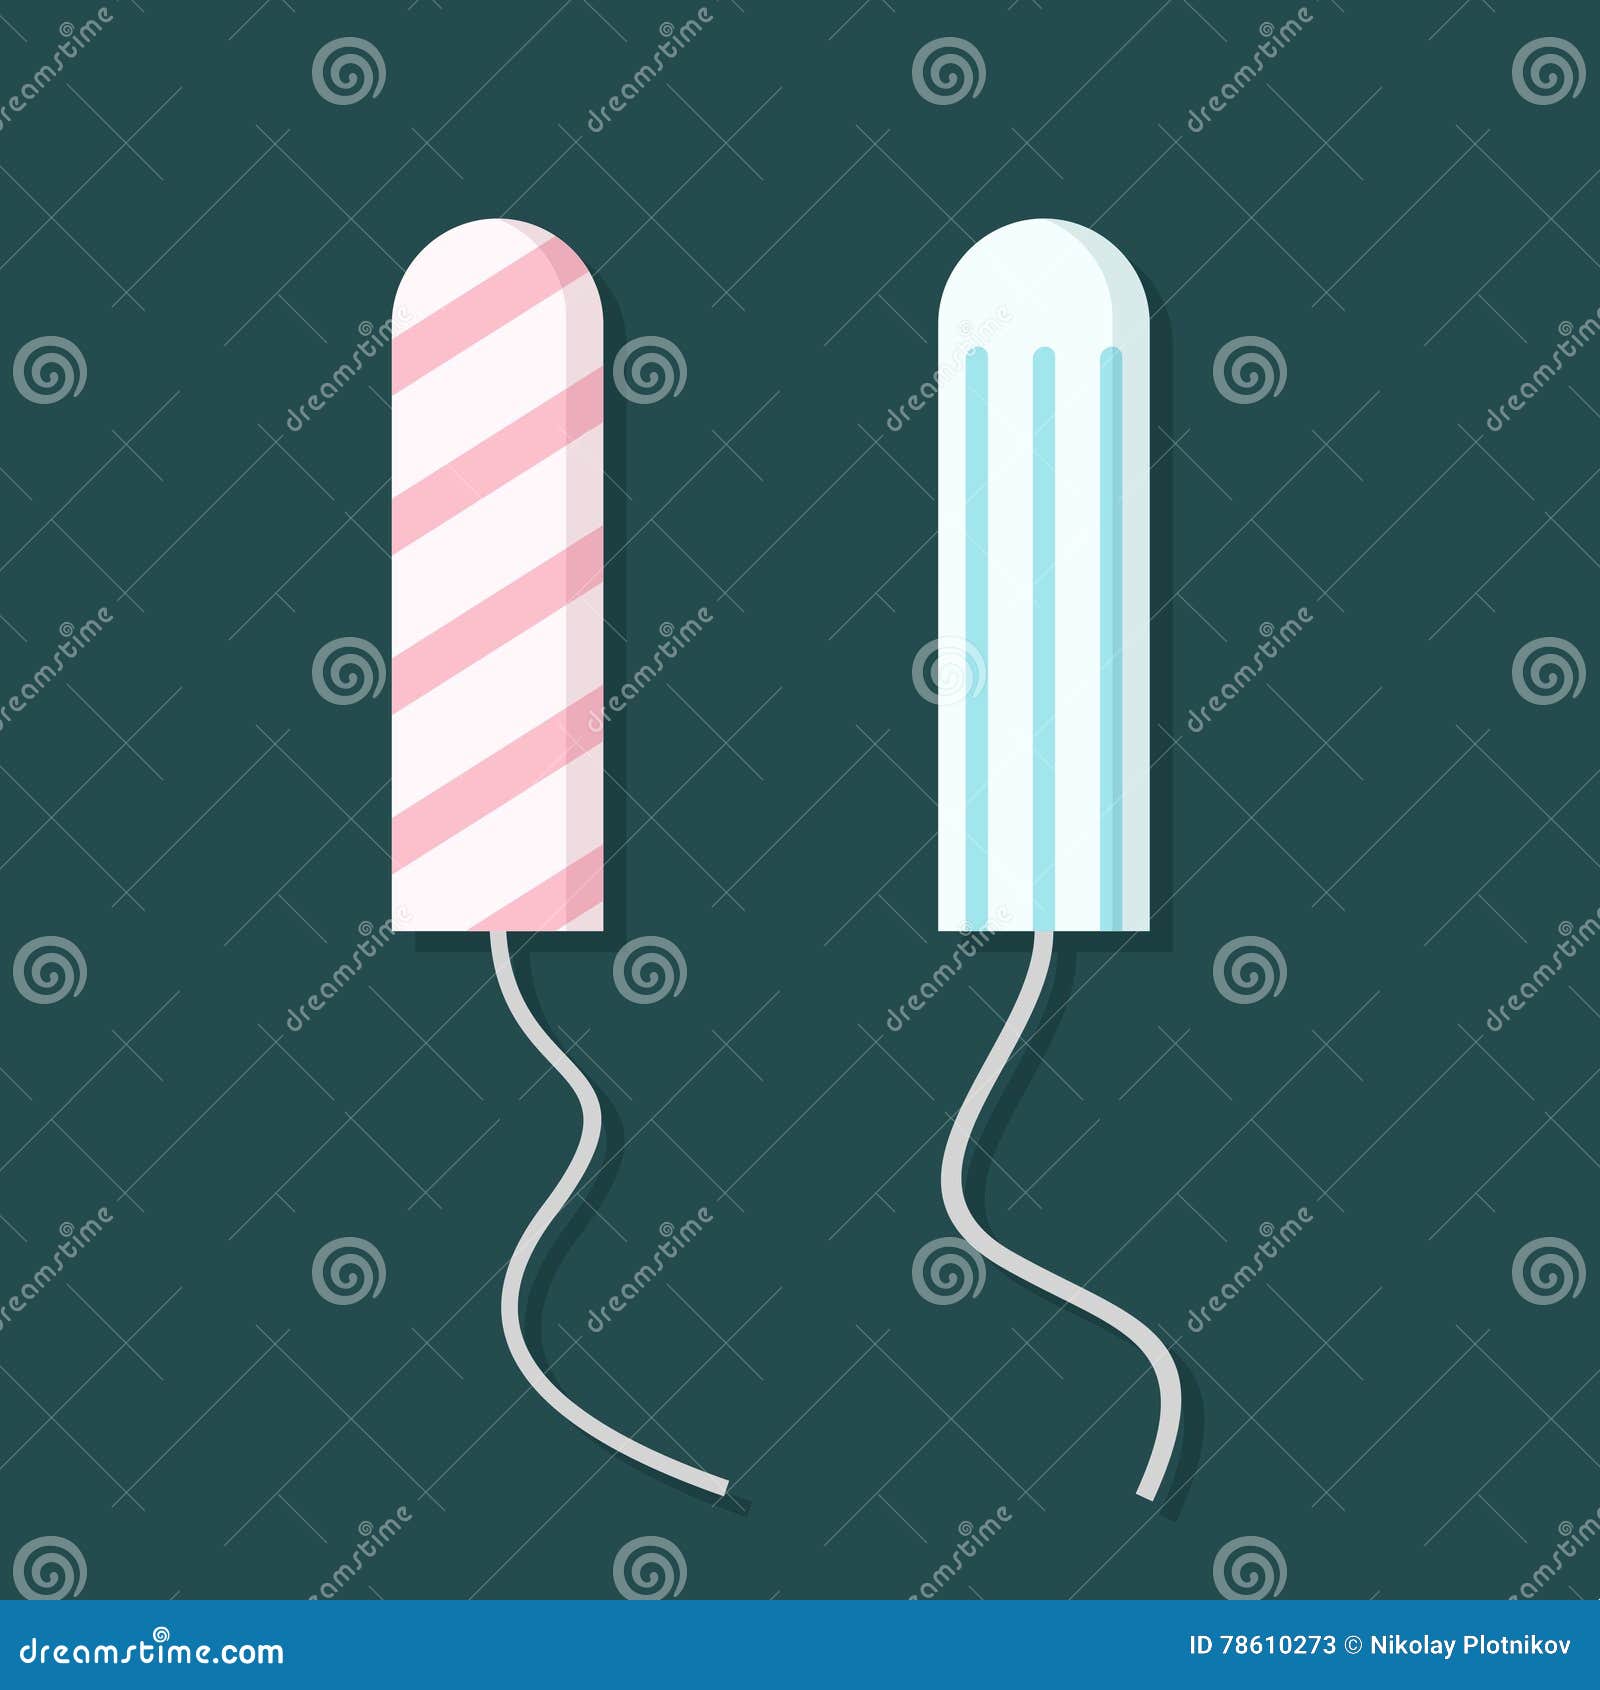 women hygiene tampons icon. feminine sanitary tampon product.